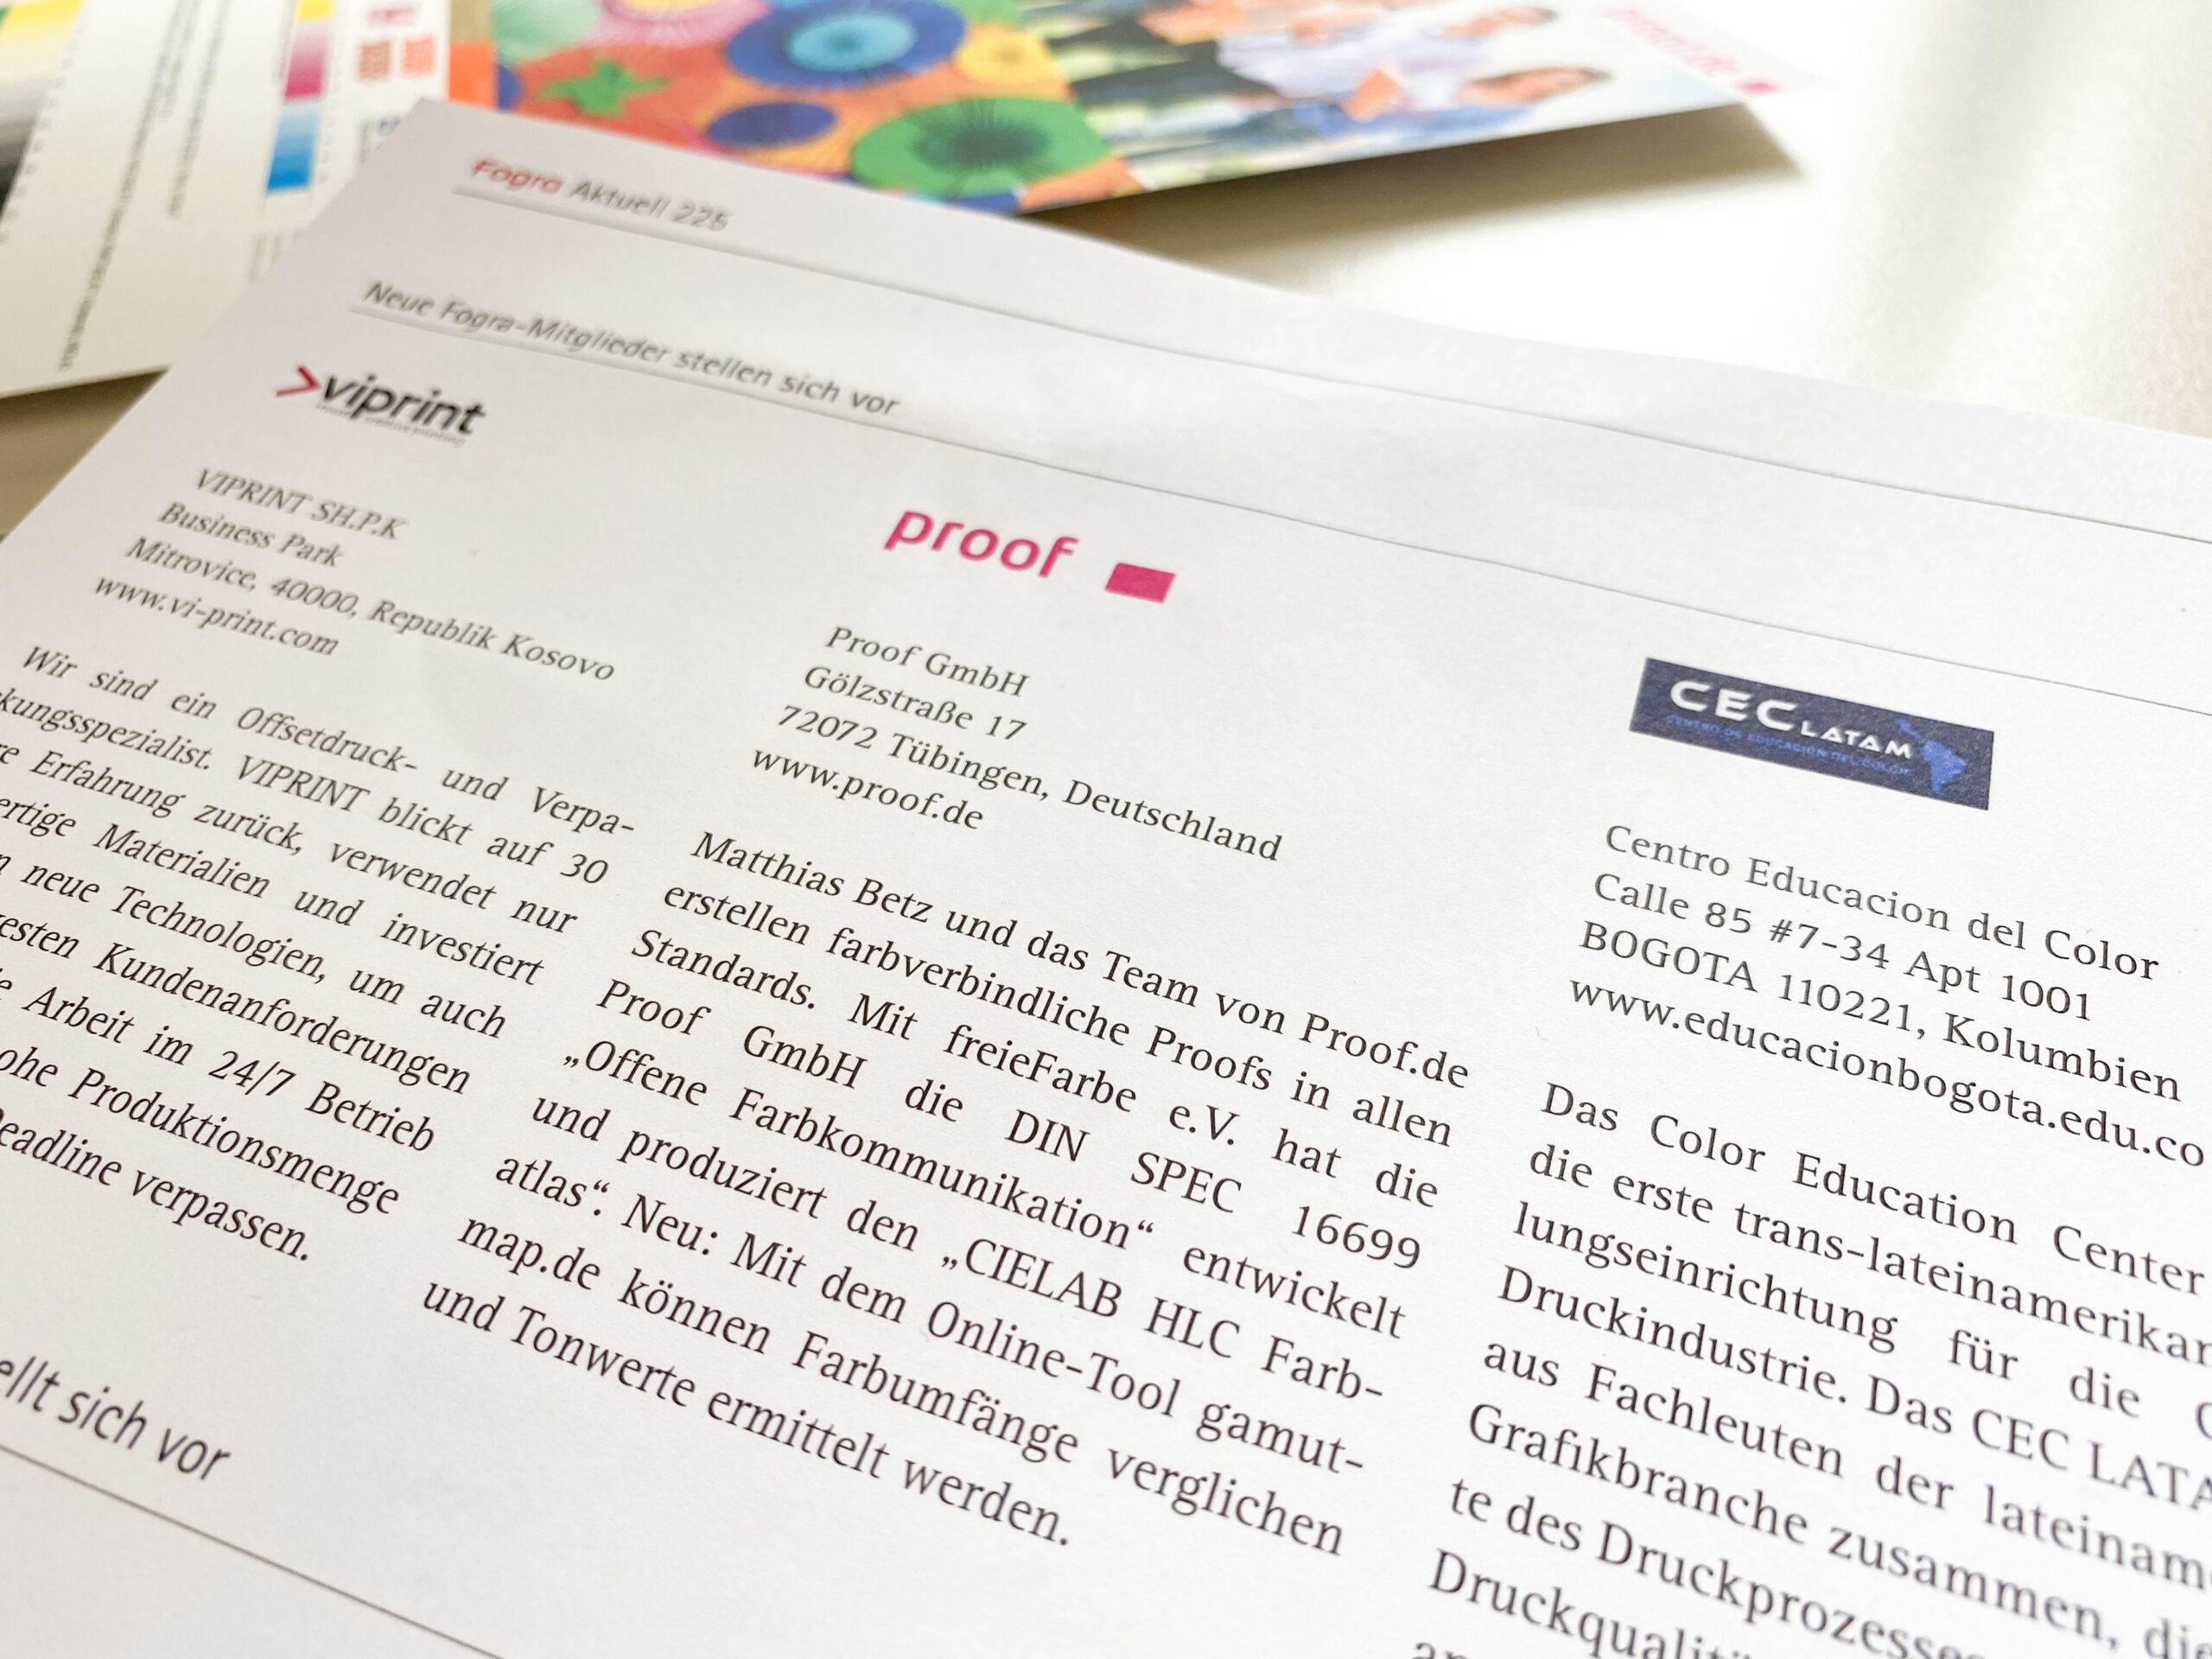 Proof GmbH:n esittely Fogra News -lehdessä nro 225, toukokuu 2021.